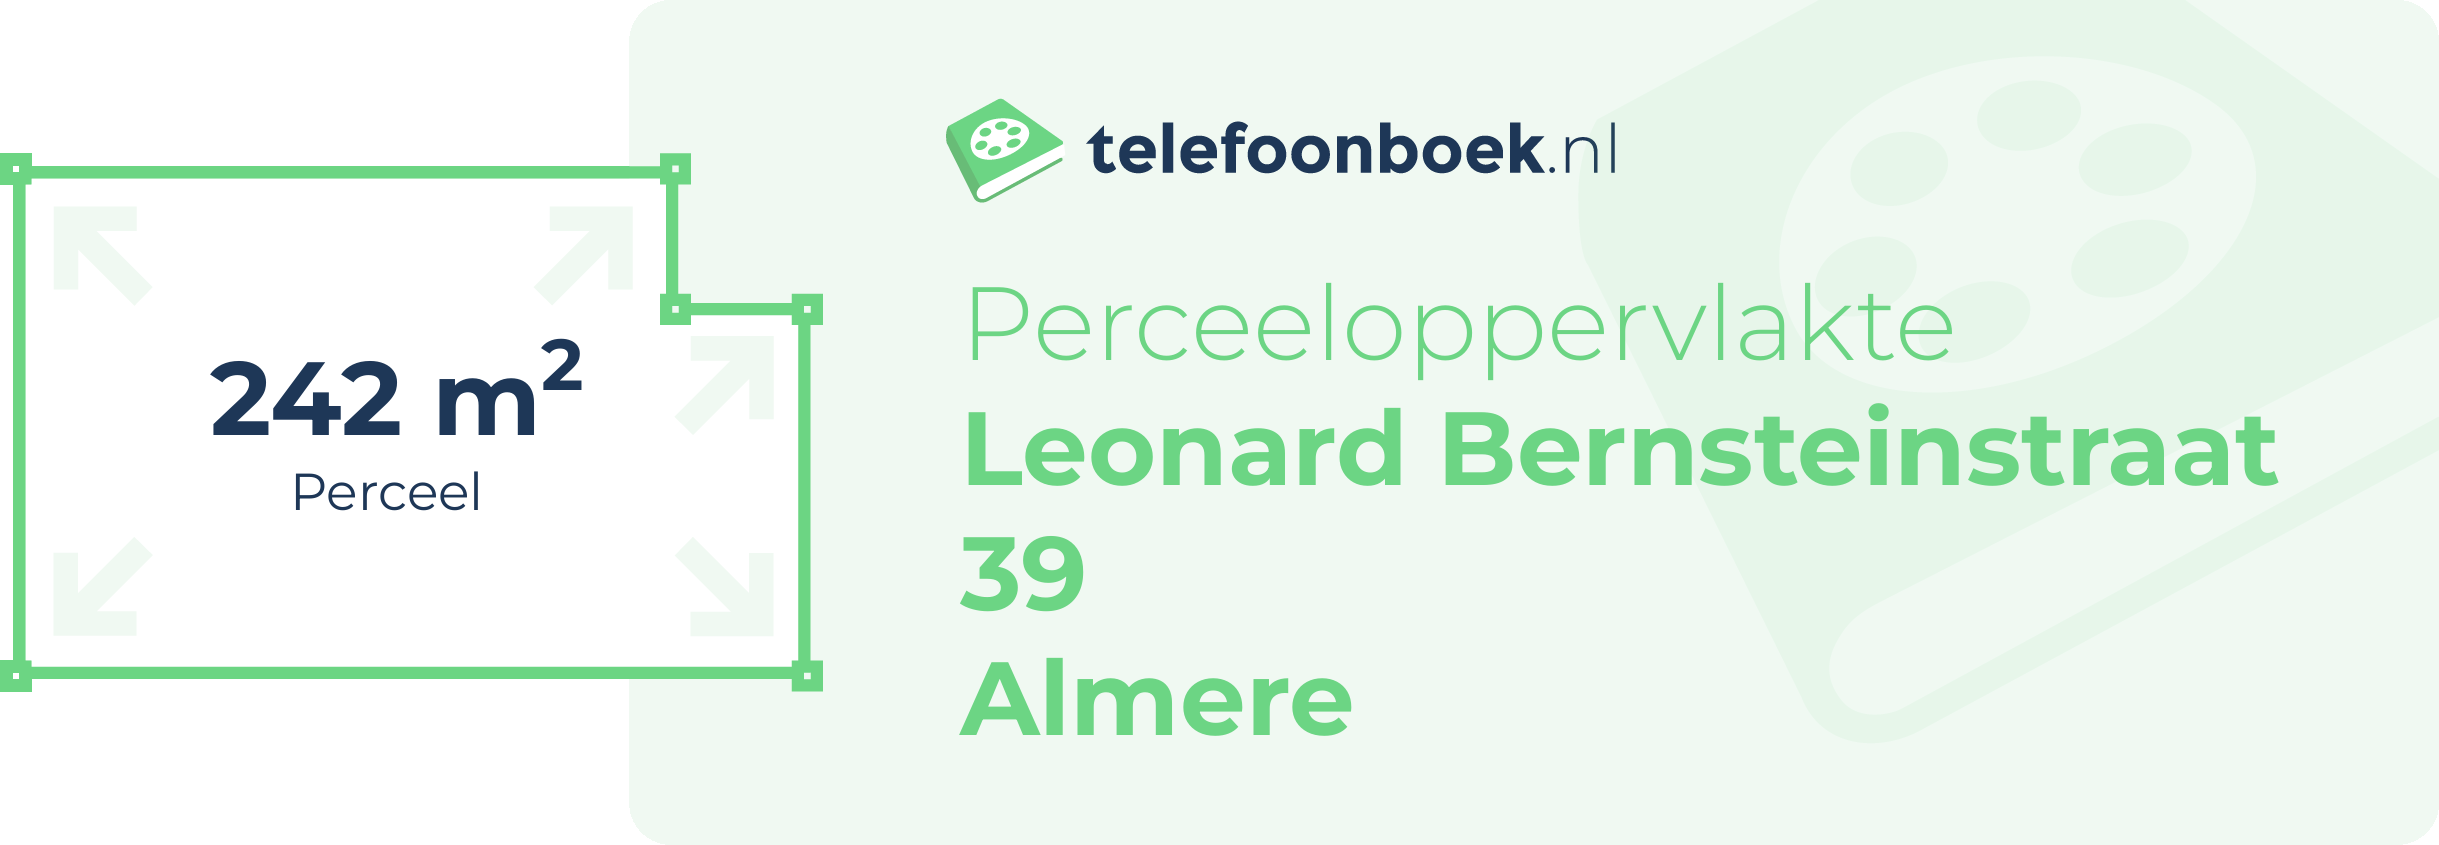 Perceeloppervlakte Leonard Bernsteinstraat 39 Almere